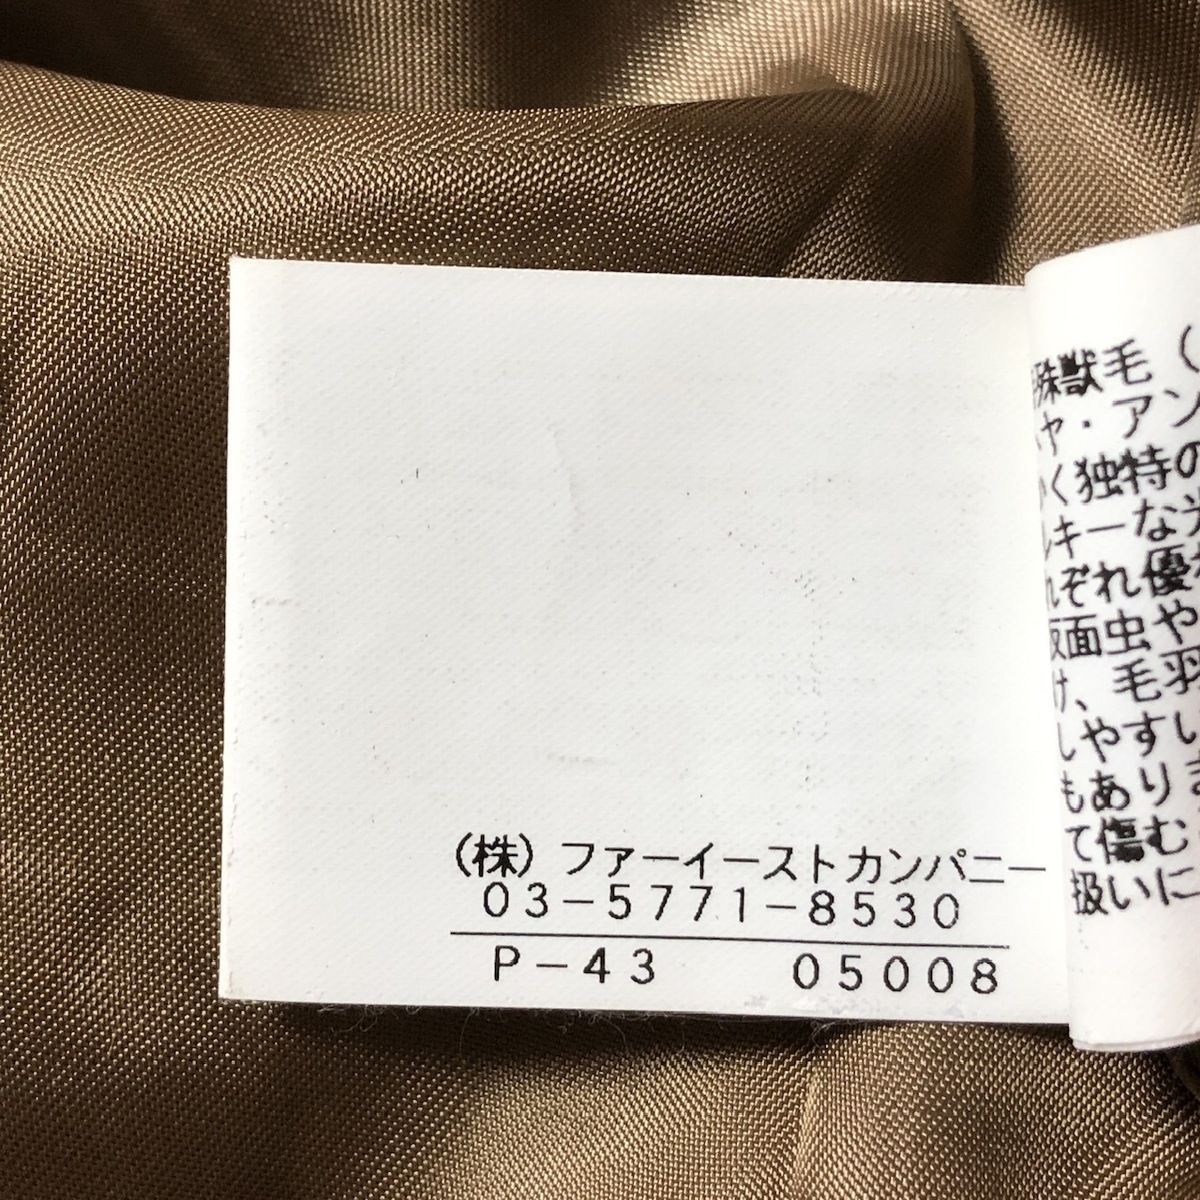 ANAYI(アナイ) コート サイズ38 M レディース美品 - ブラウン 長袖/秋 ...